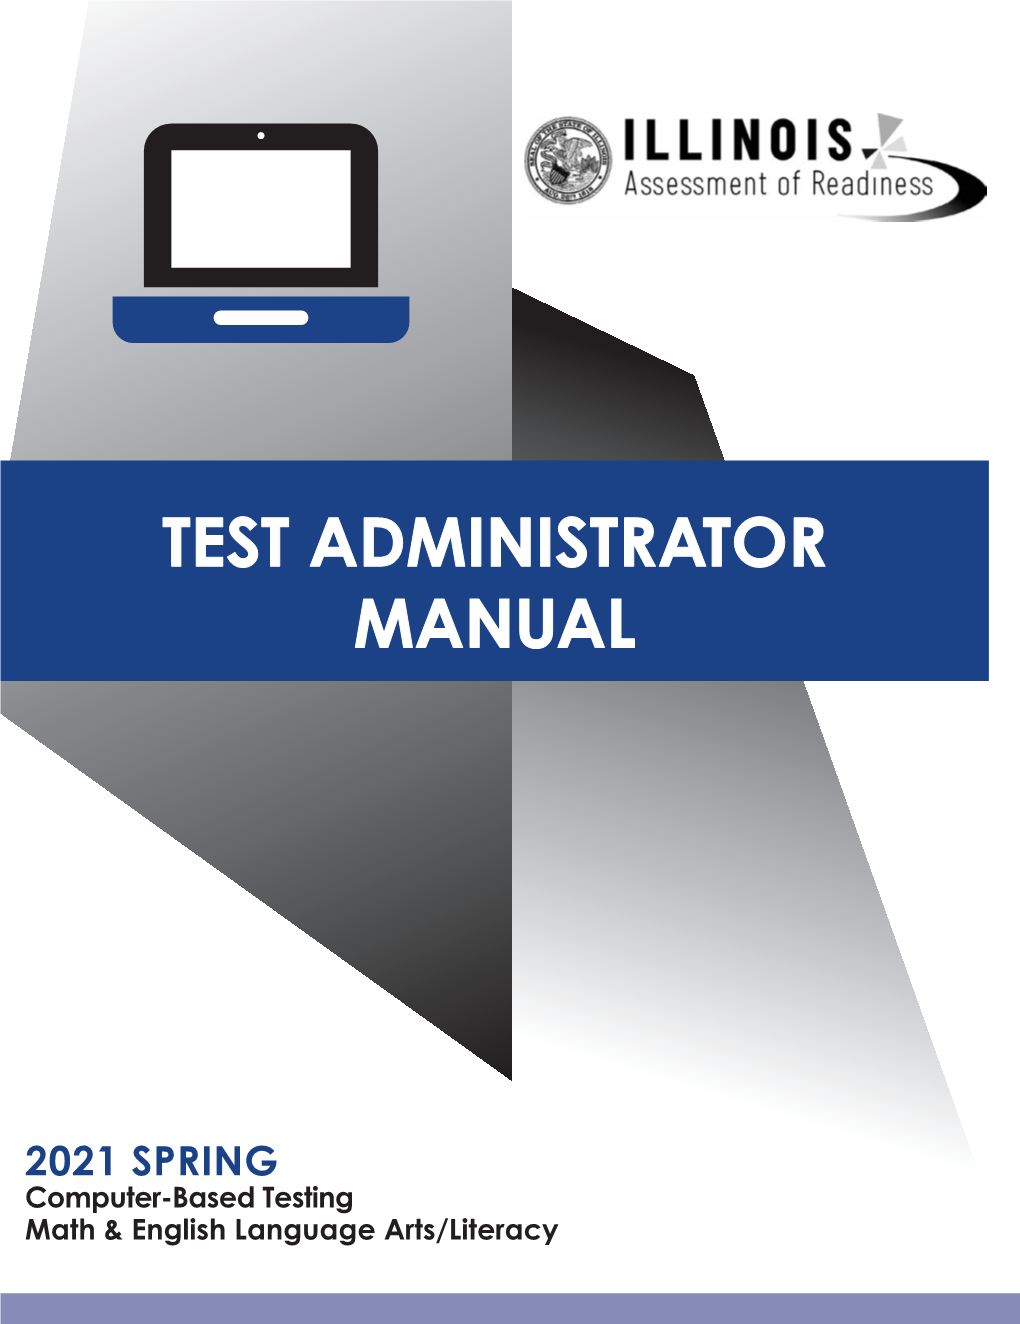 IAR Spring 2021 Computer-Based Test Administration Manual